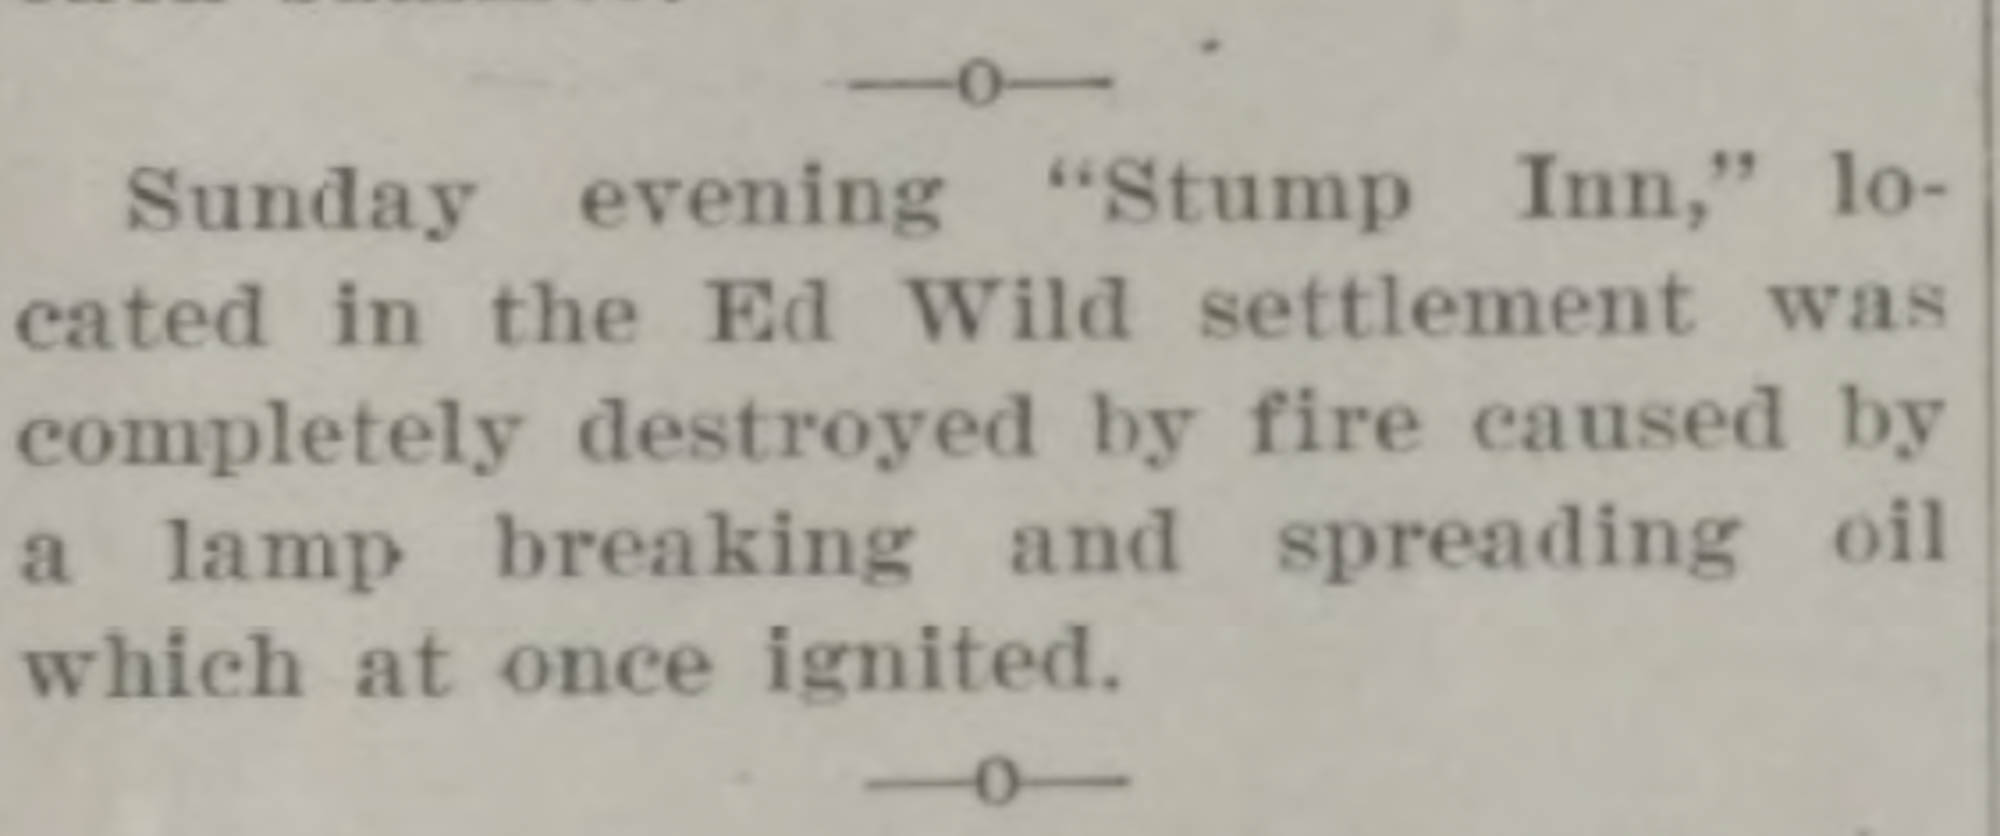 Idlewild Lodge - idlewildlodge.github.io - 1932-01-29 - The Estes Park Trail - Stump Inn Burns Down